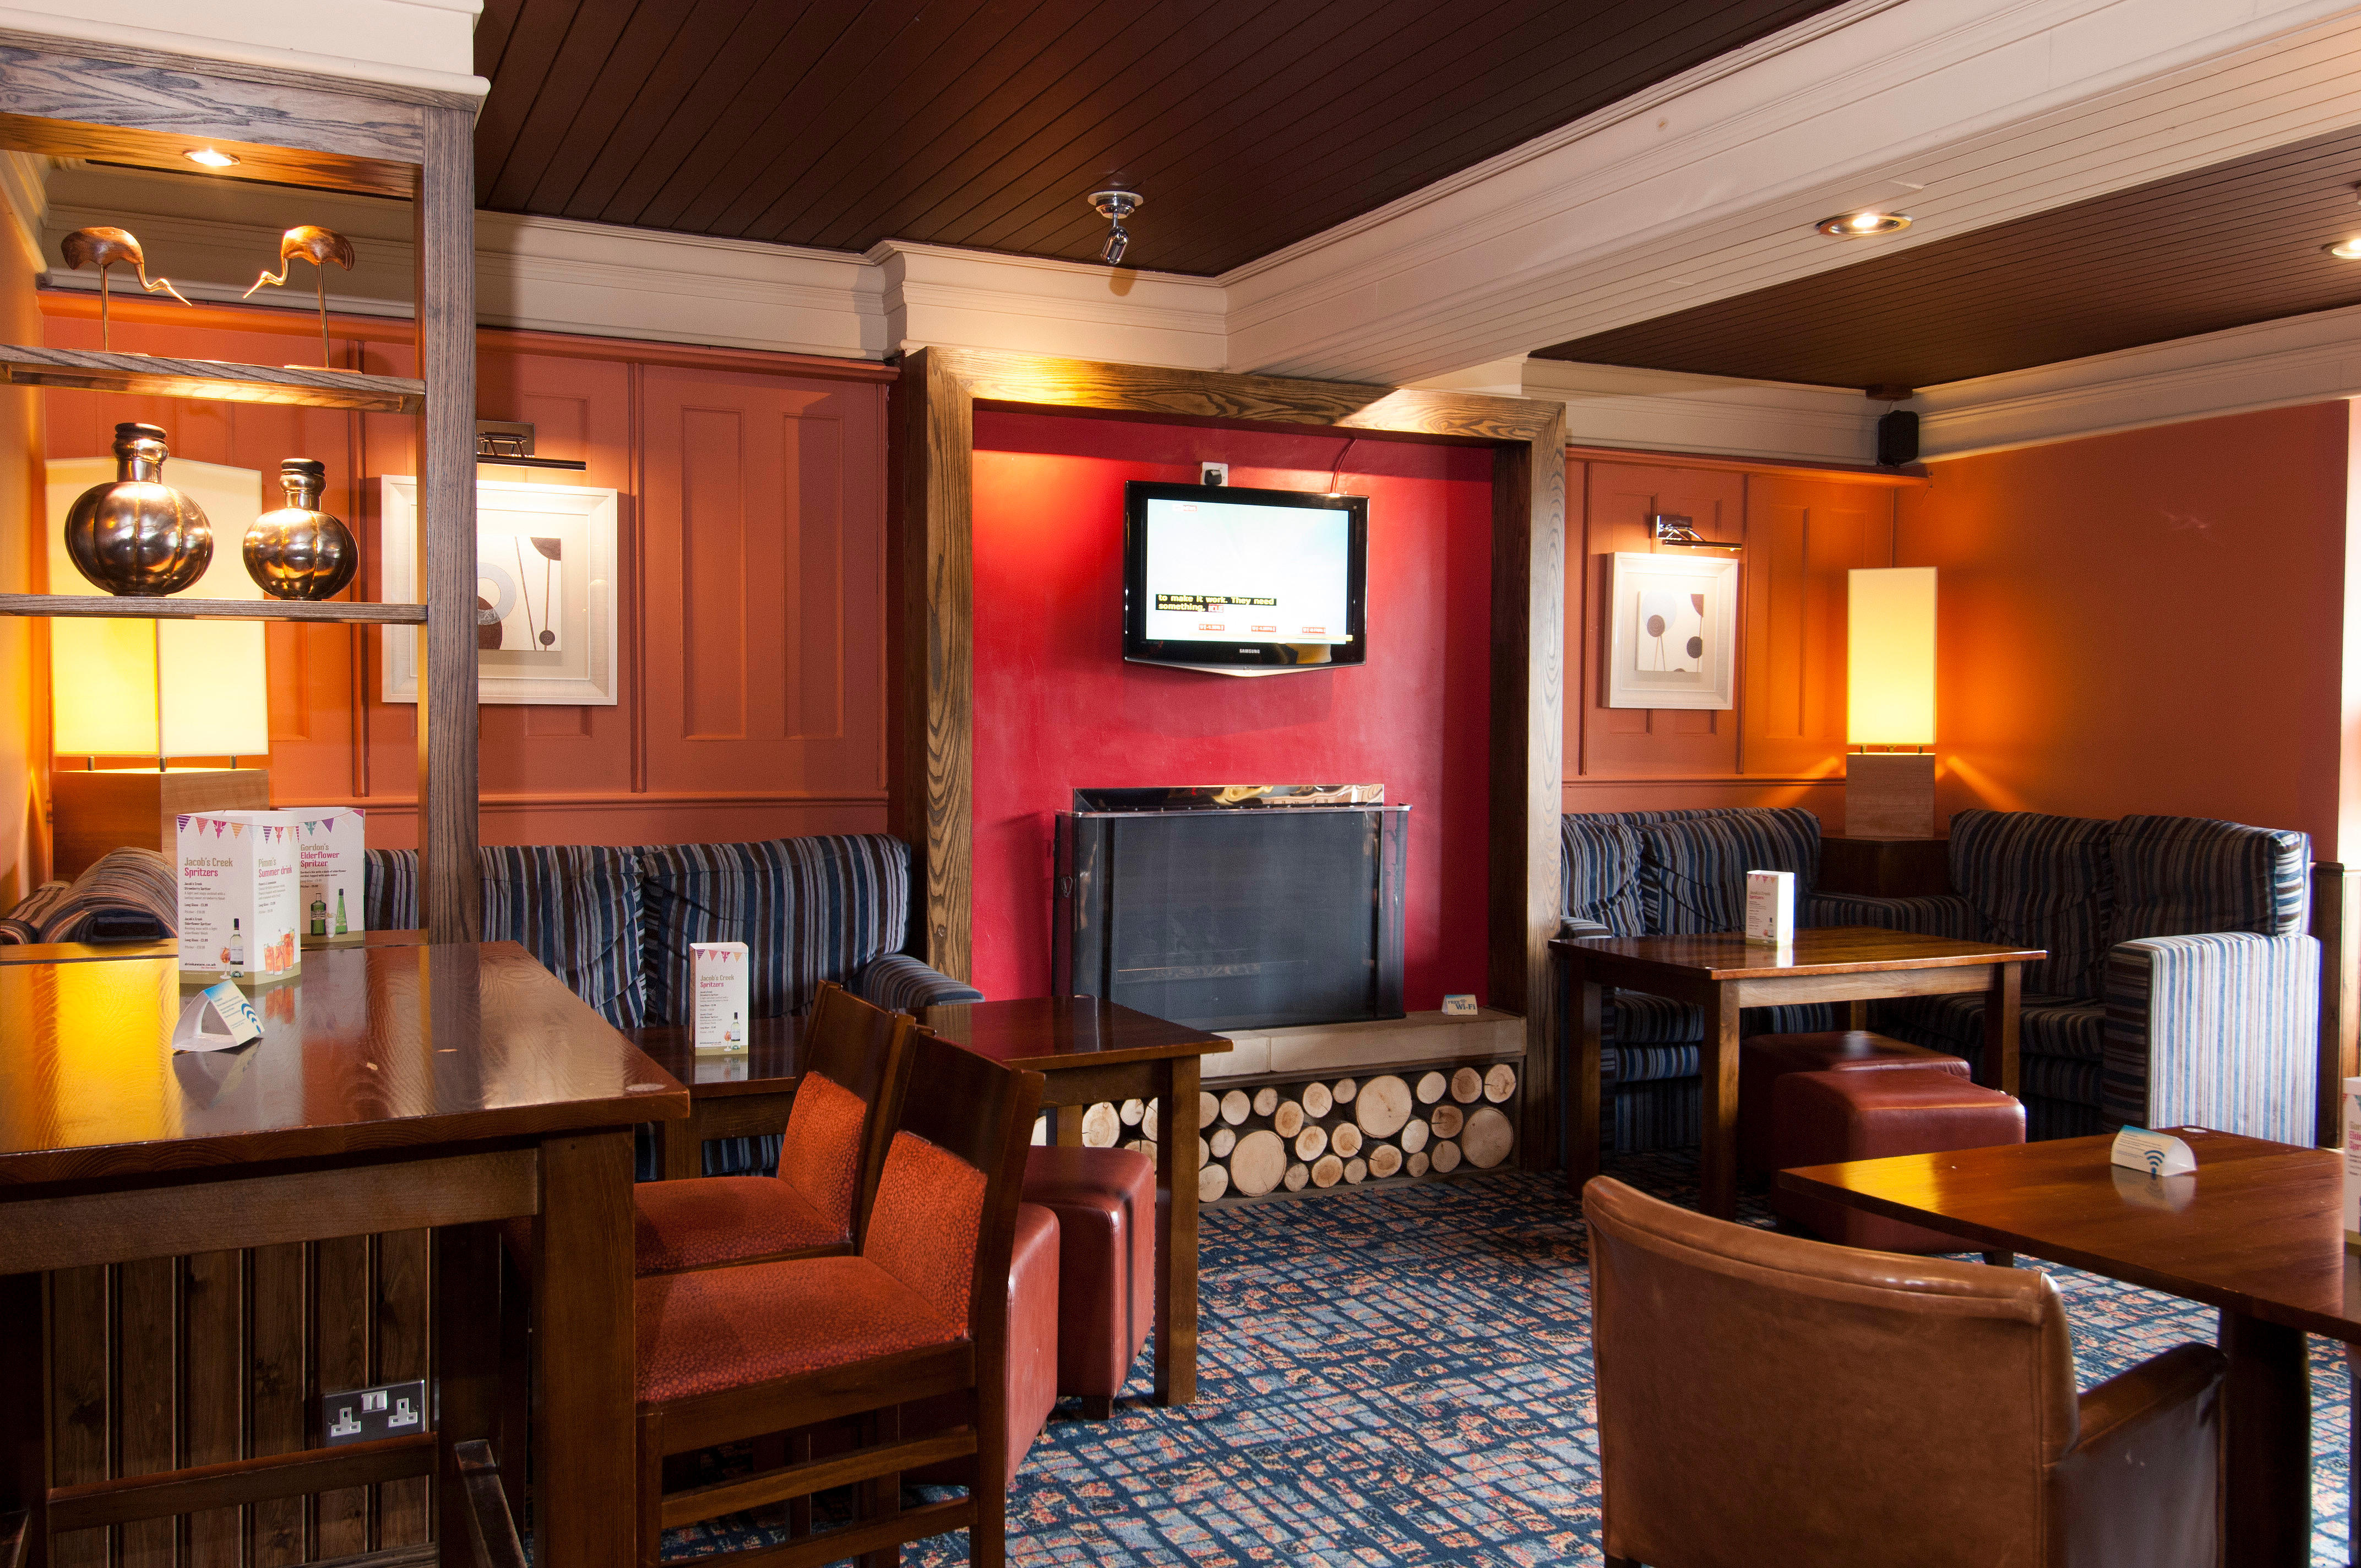 Brewers Fayre restaurant interior Premier Inn Bradford South hotel Bradford 03337 773938